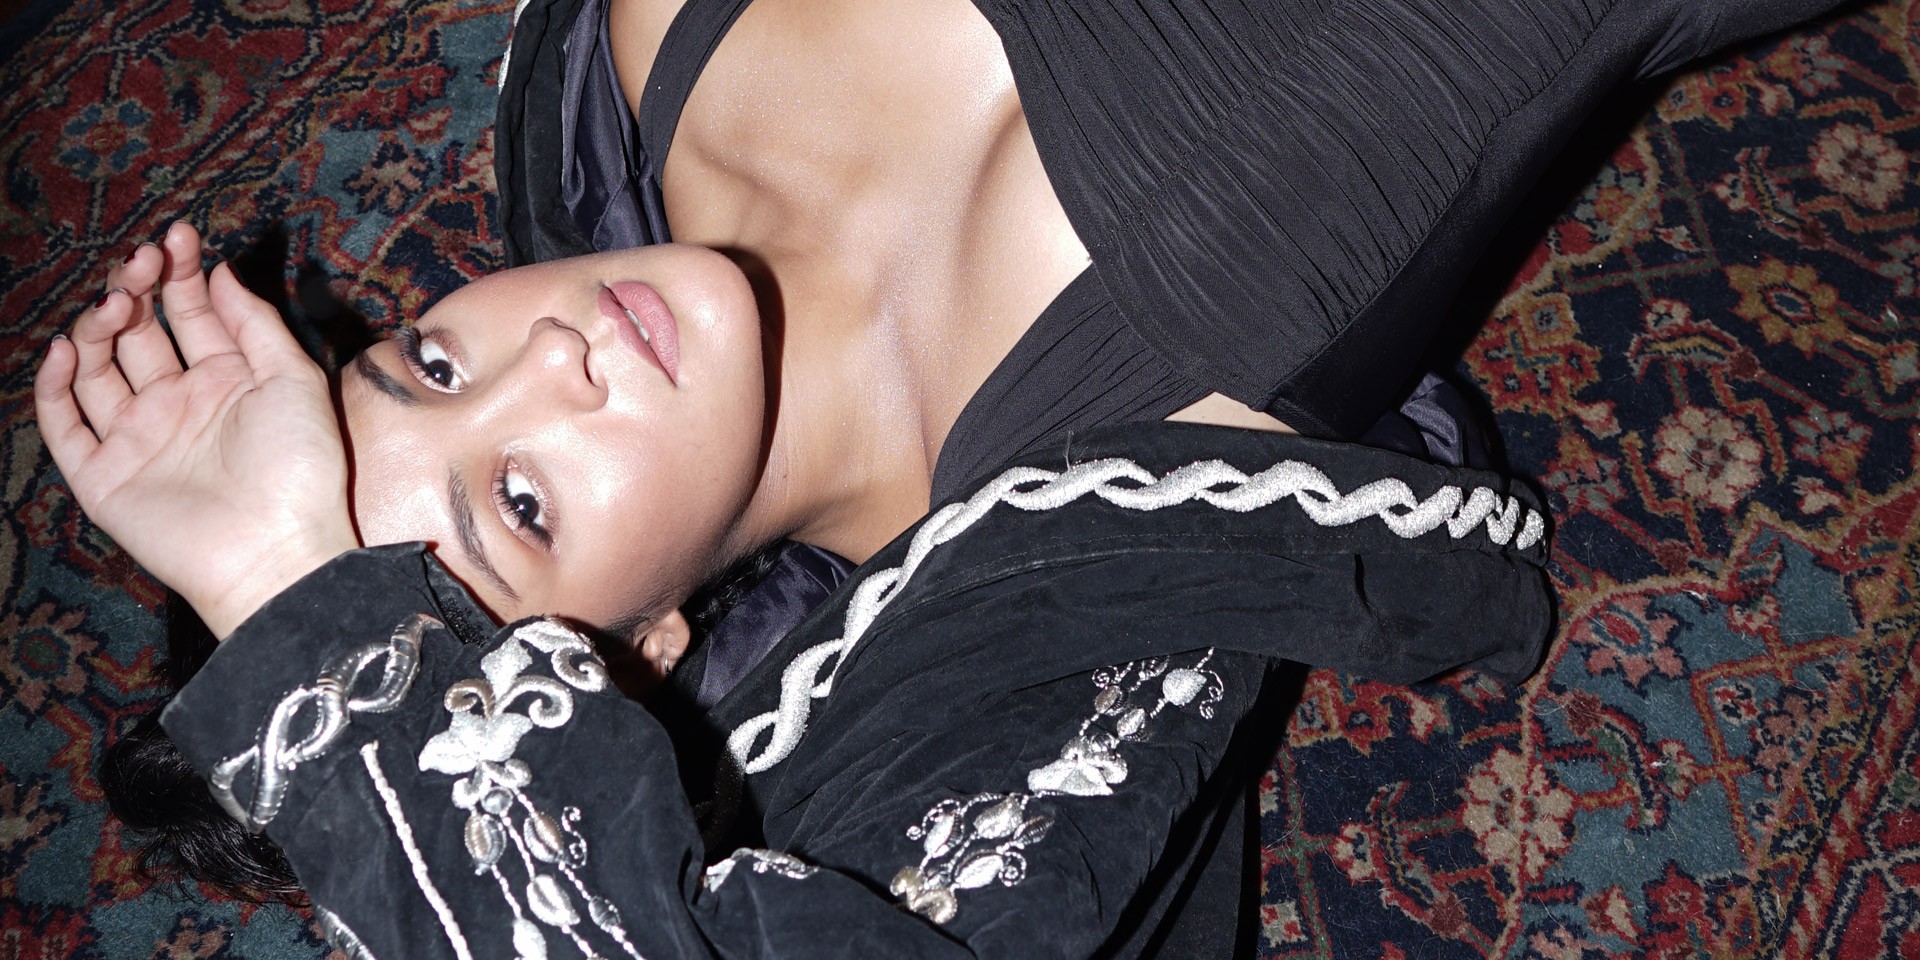 Kiana Valenciano drops fearless debut album See Me – listen